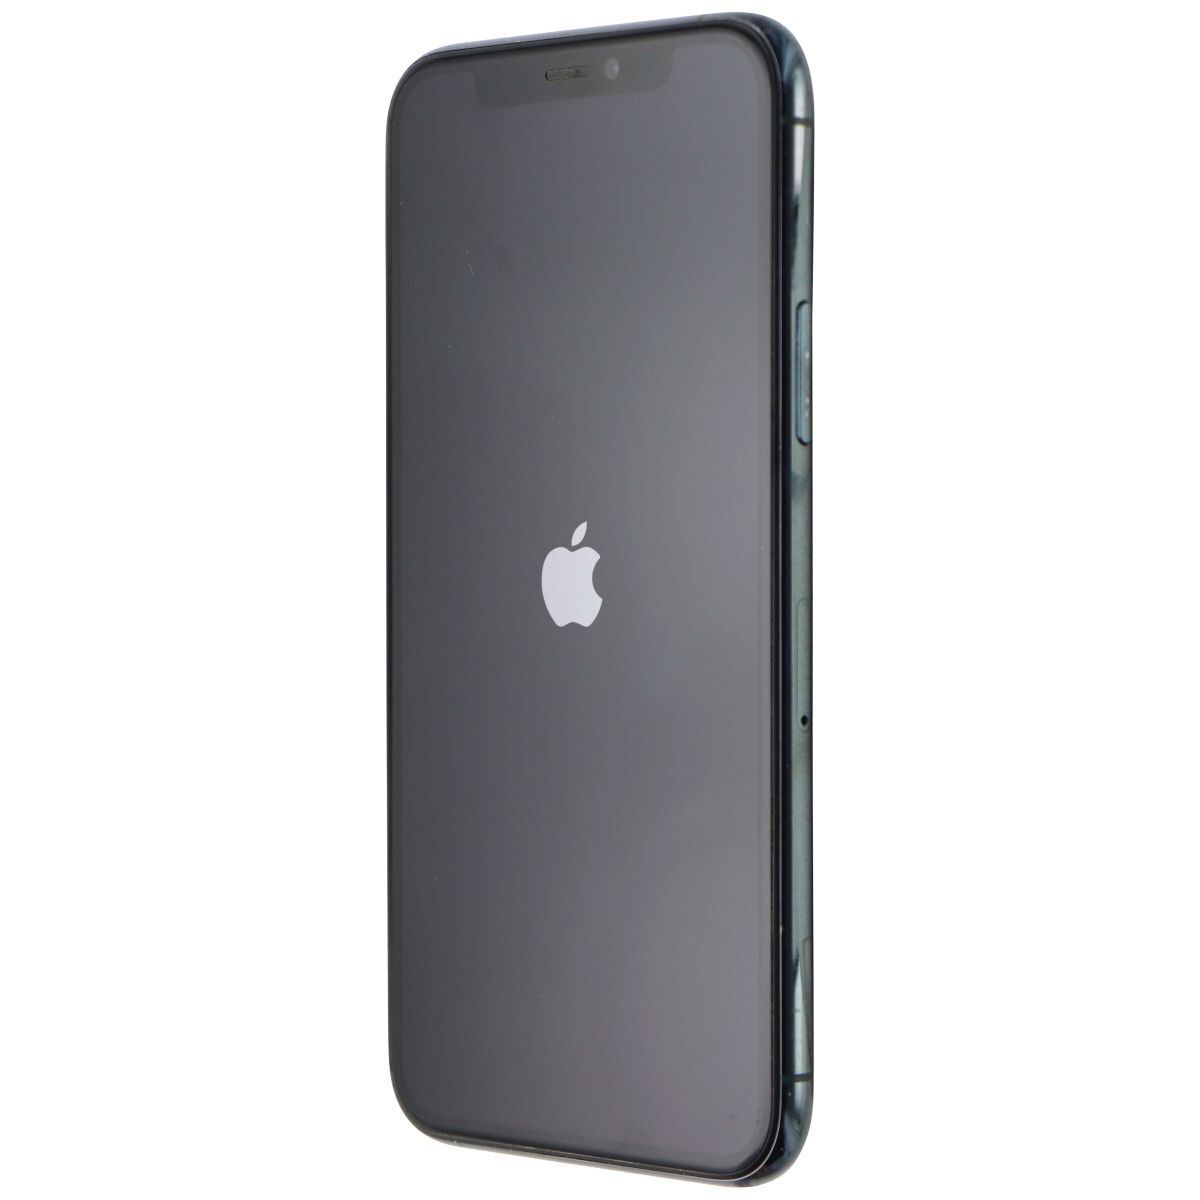 Apple iPhone 11 Pro (5.8-inch) Smartphone A2160 256GB (Unlocked) - Green